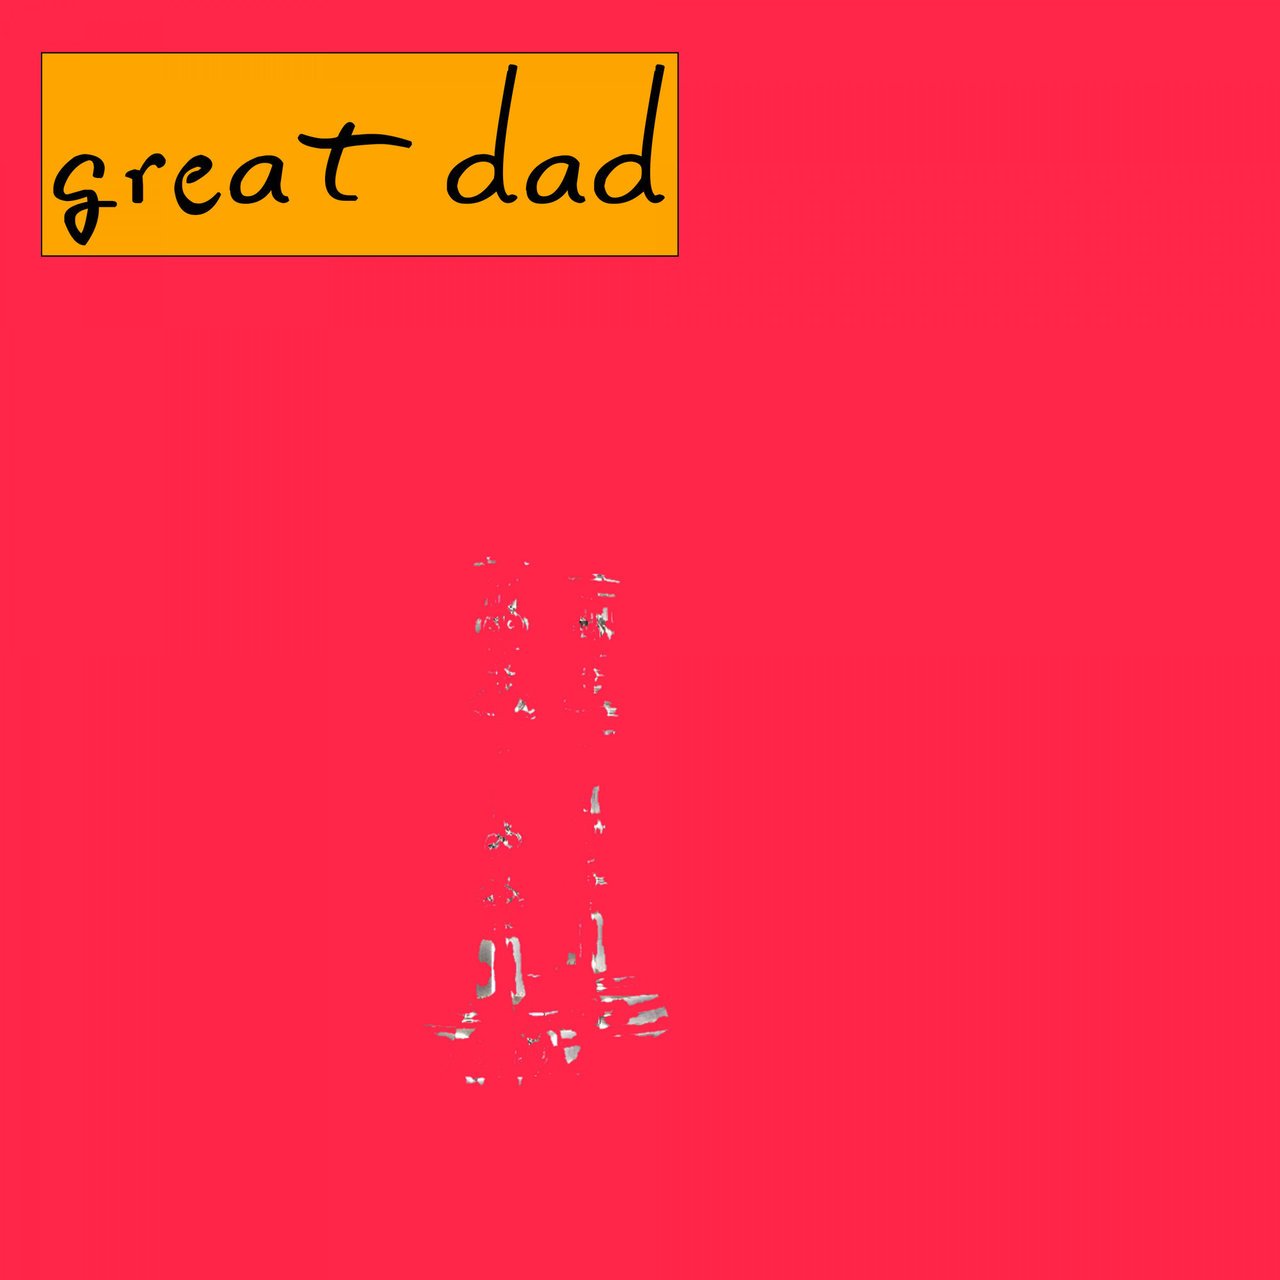 Текст песни hells great dad